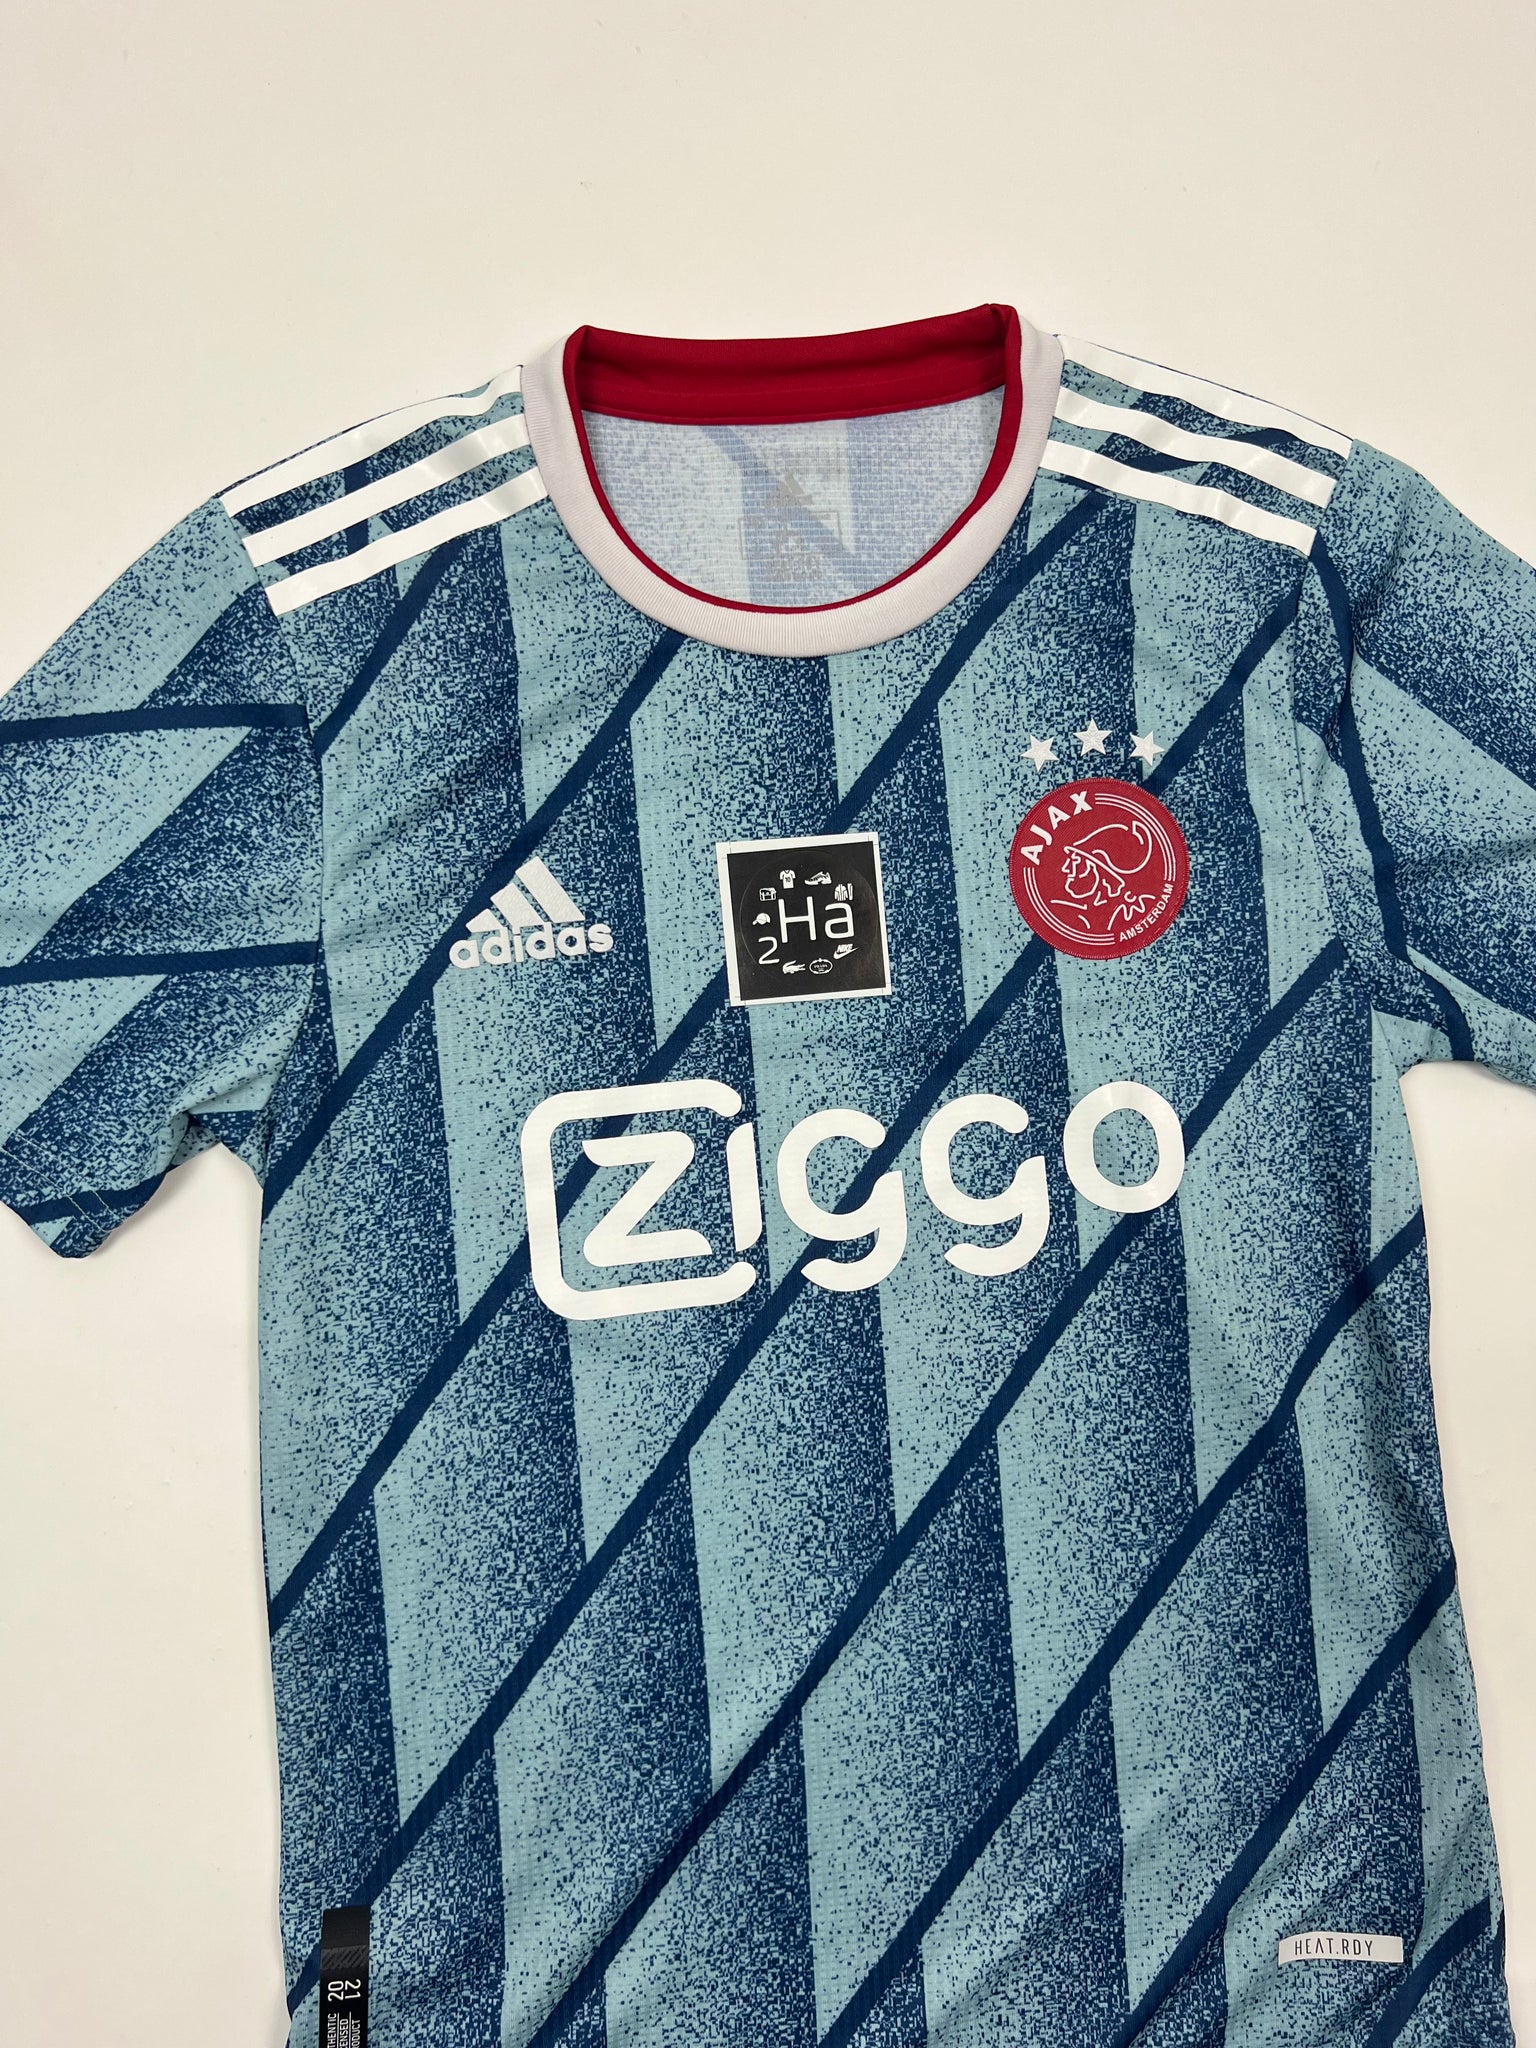 Adidas Ajax Amsterdam Jersey (S)